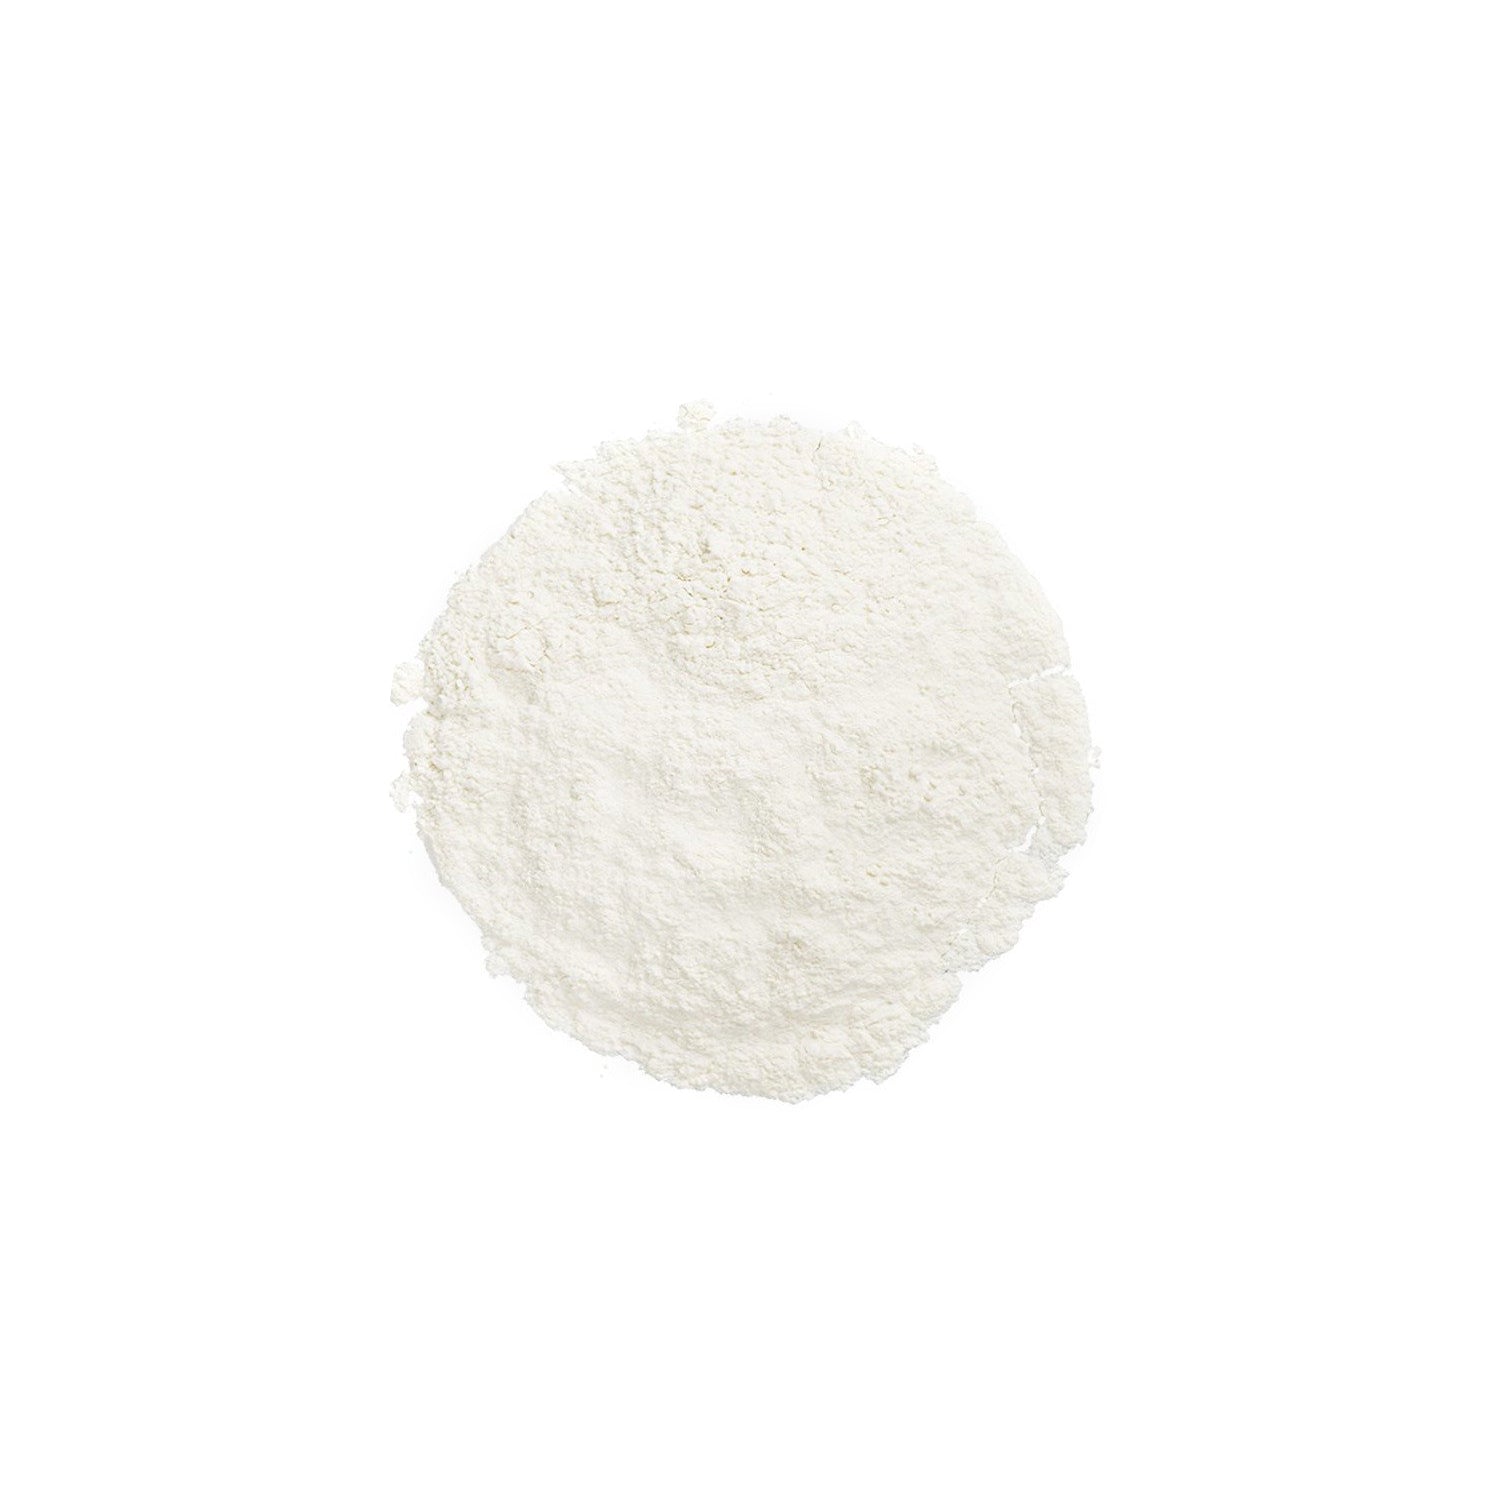 
  
  Manasi 7 Silk Finish Powder Translucent Semi Matte Finish- LORDE beauty and cosmetics
  
